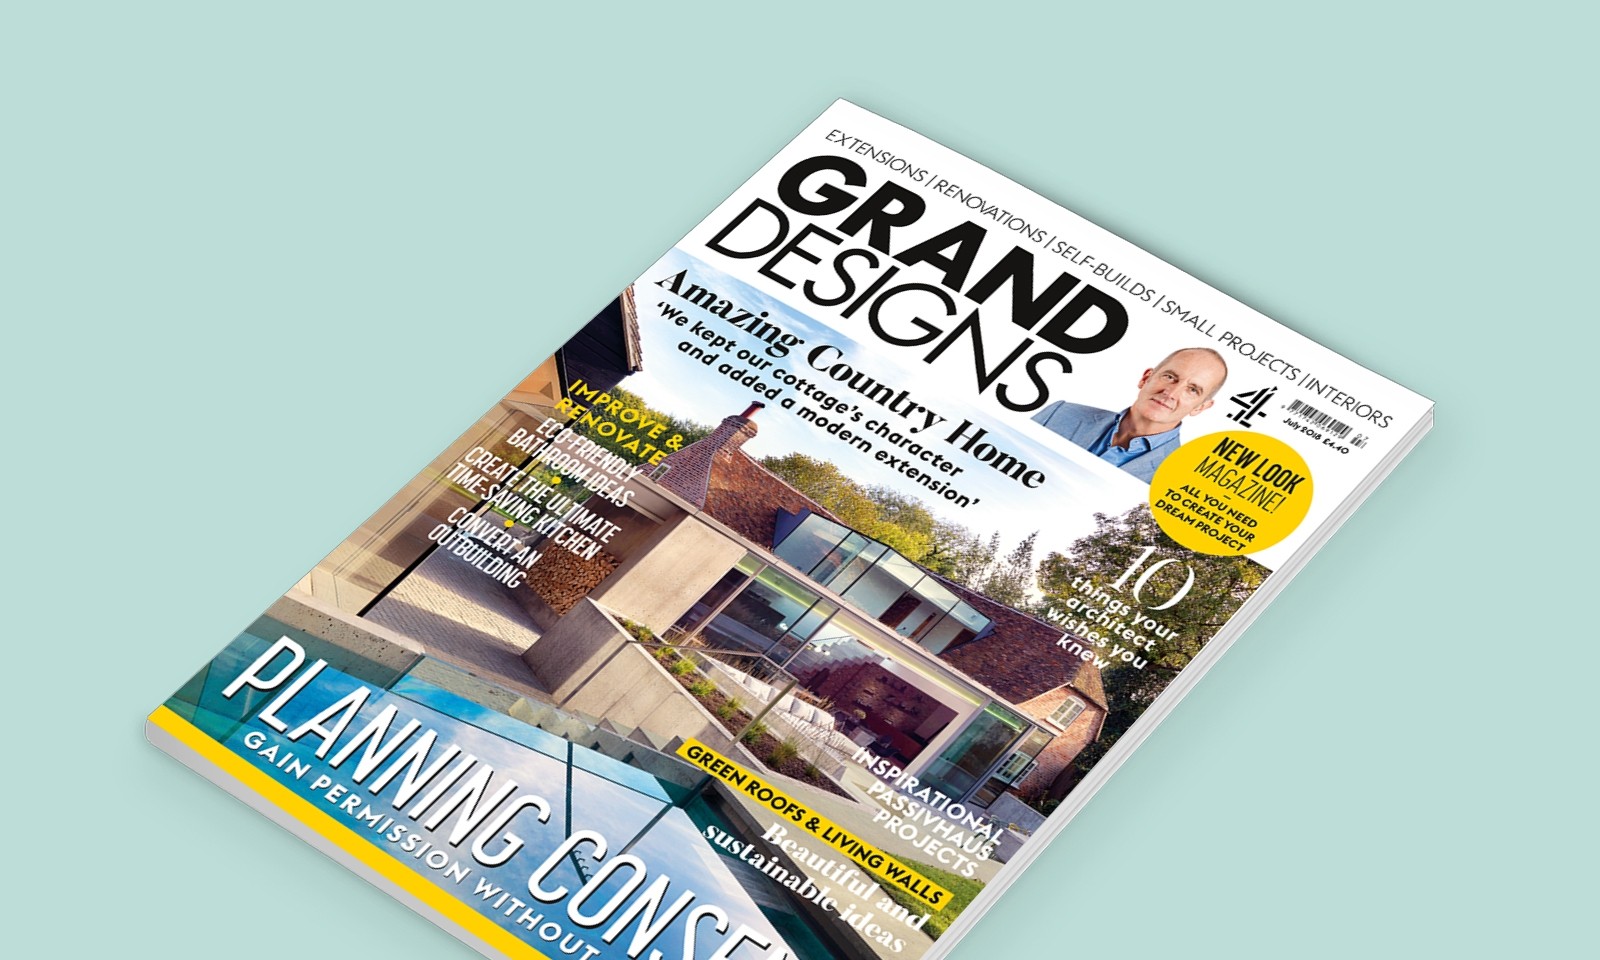 The cover of grand designs magazine.